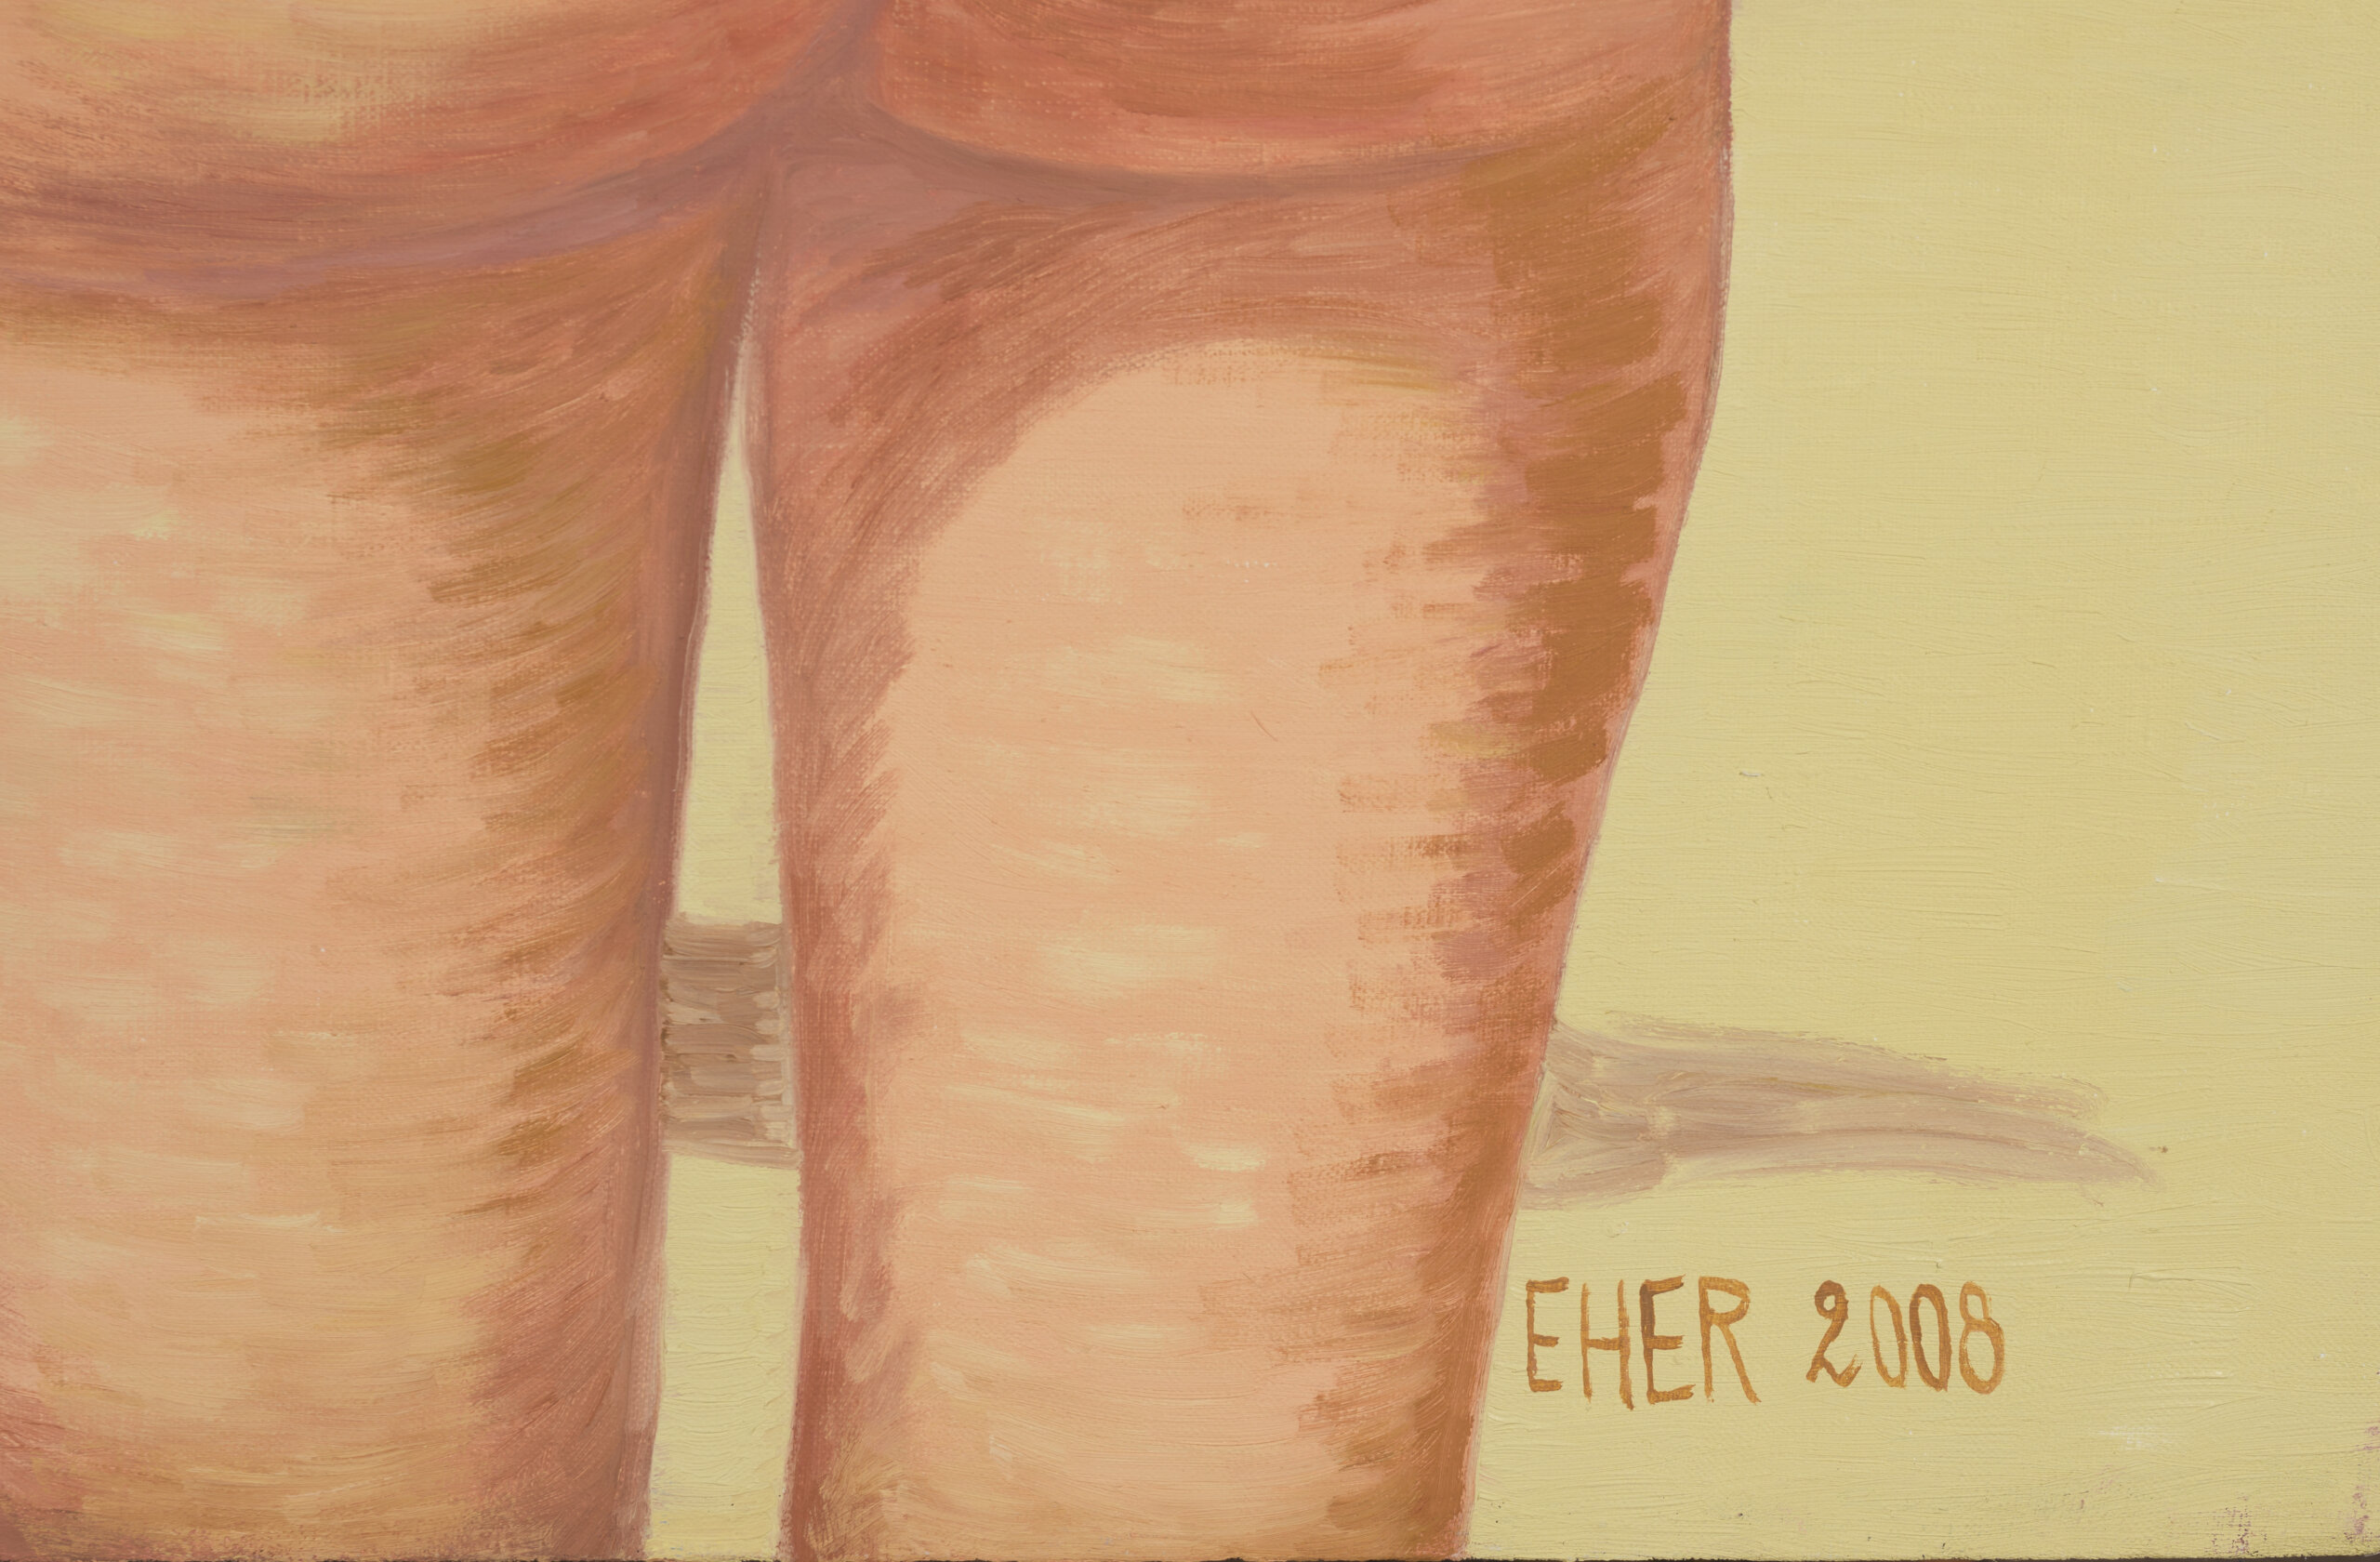 Silva Eher “Aeg olla”, 2008. 180 x 130 cm.